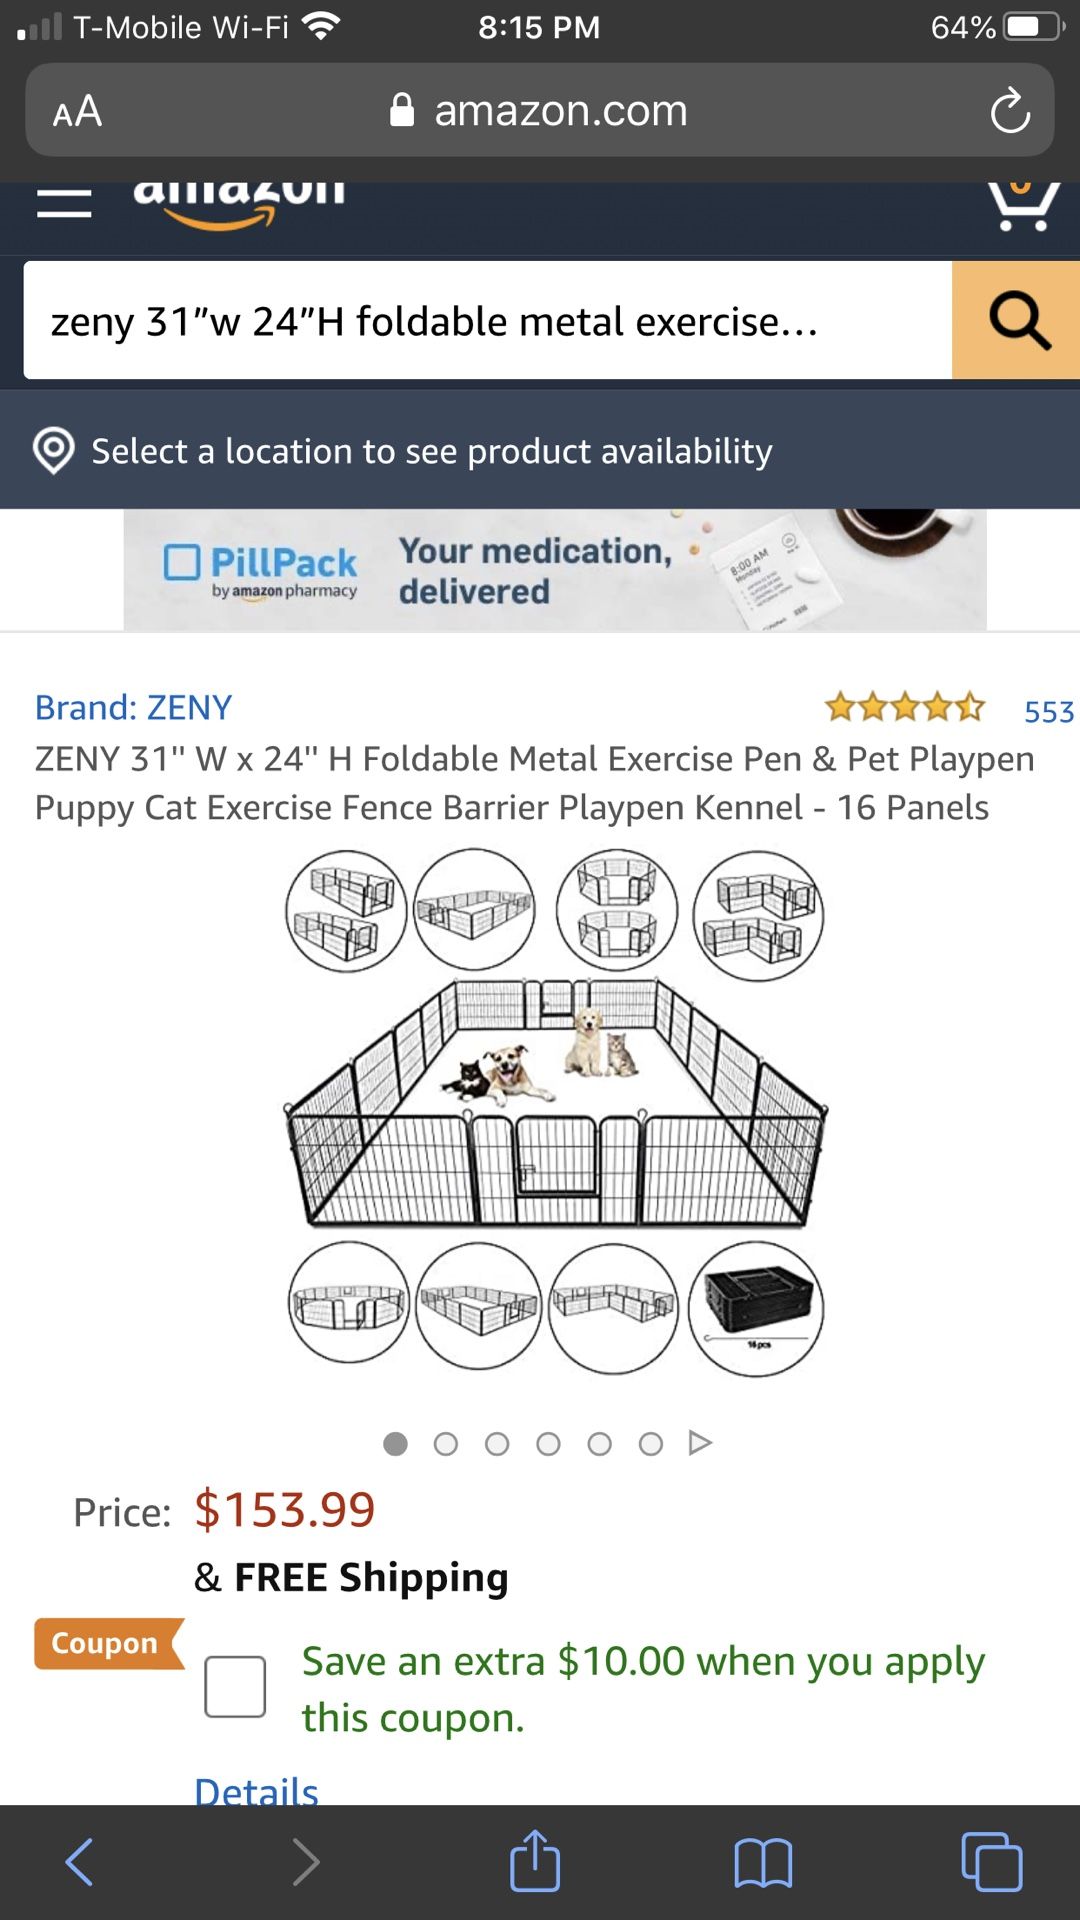 Zeny 31”w 24”H Foldable Metal exercise pen & pet